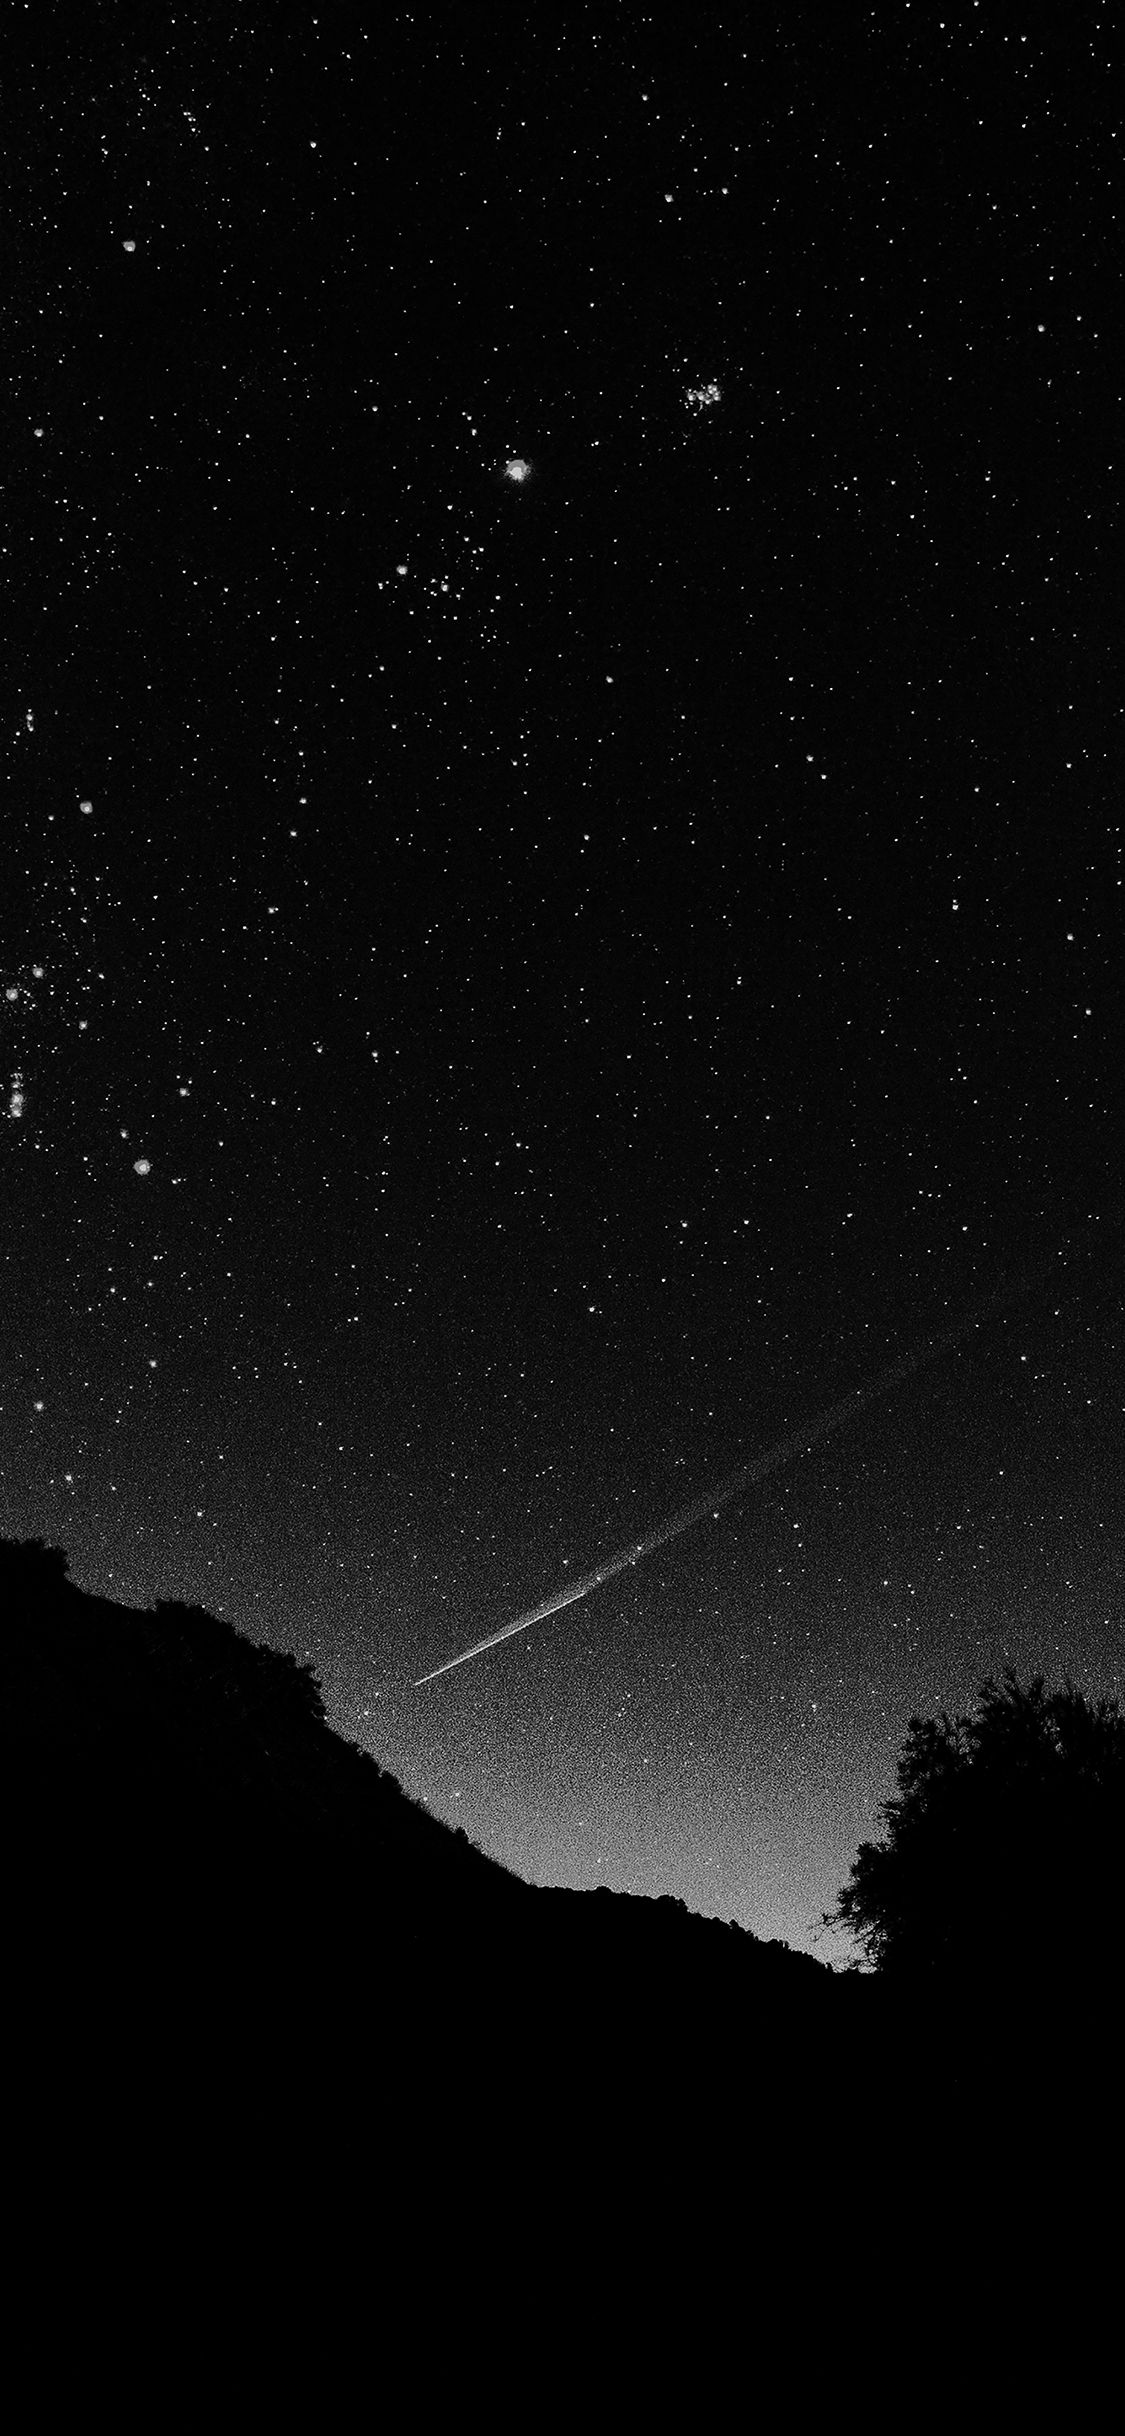 Astronomy Space Black Sky Night Beautiful Falling Star Via For IP. Night Sky Wallpaper, Black Wallpaper, Dark Wallpaper